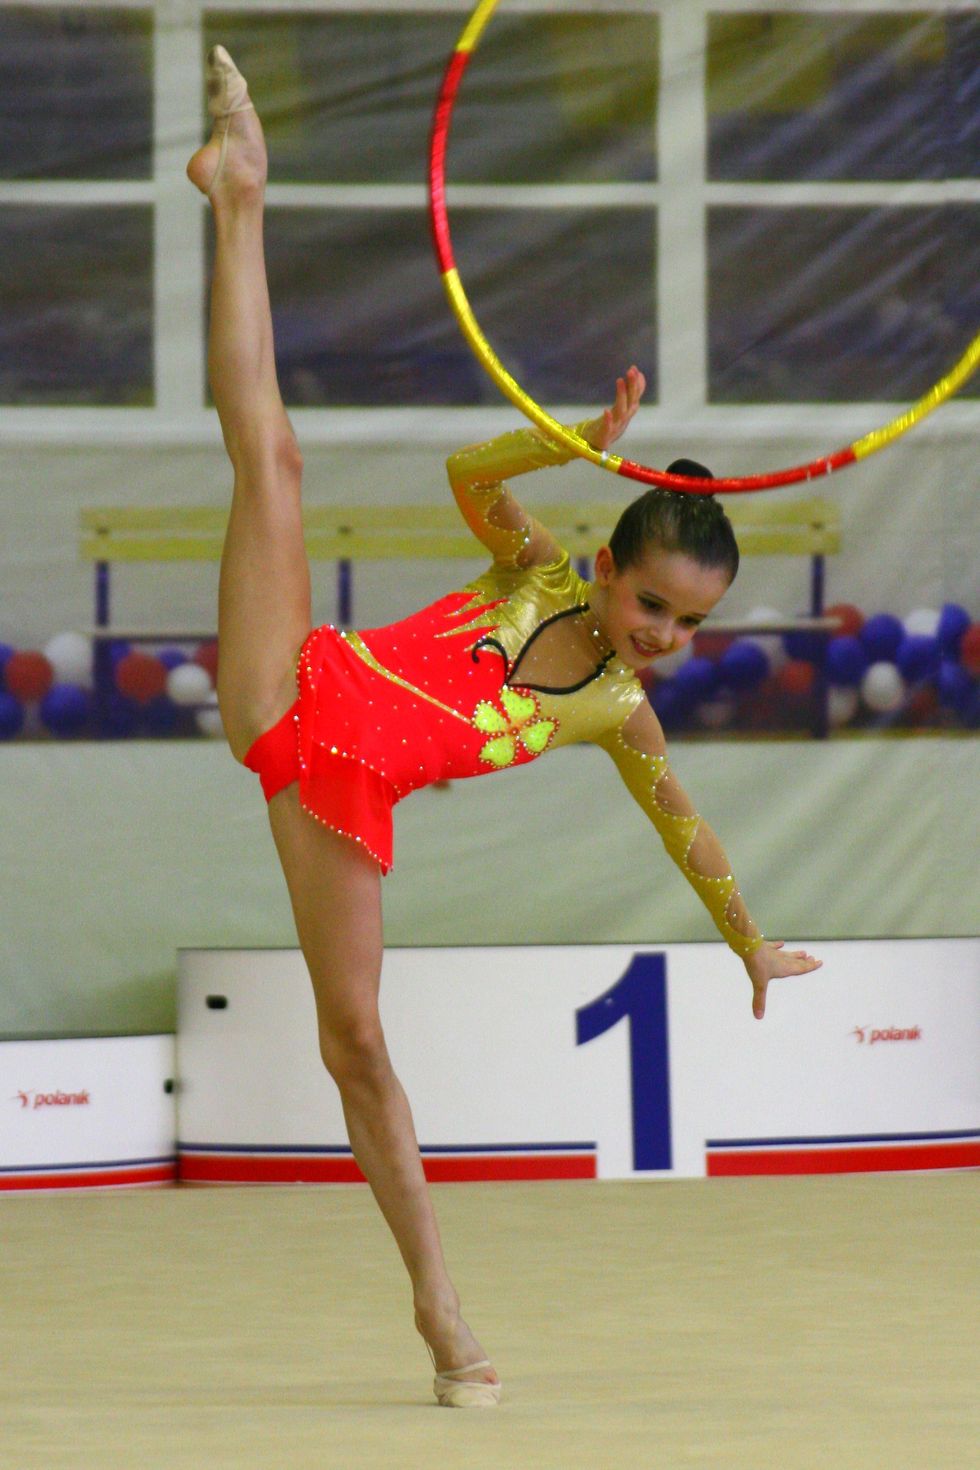 Maria Khoreva swings a hula hoop with her leg in du00e9veloppu00e9.